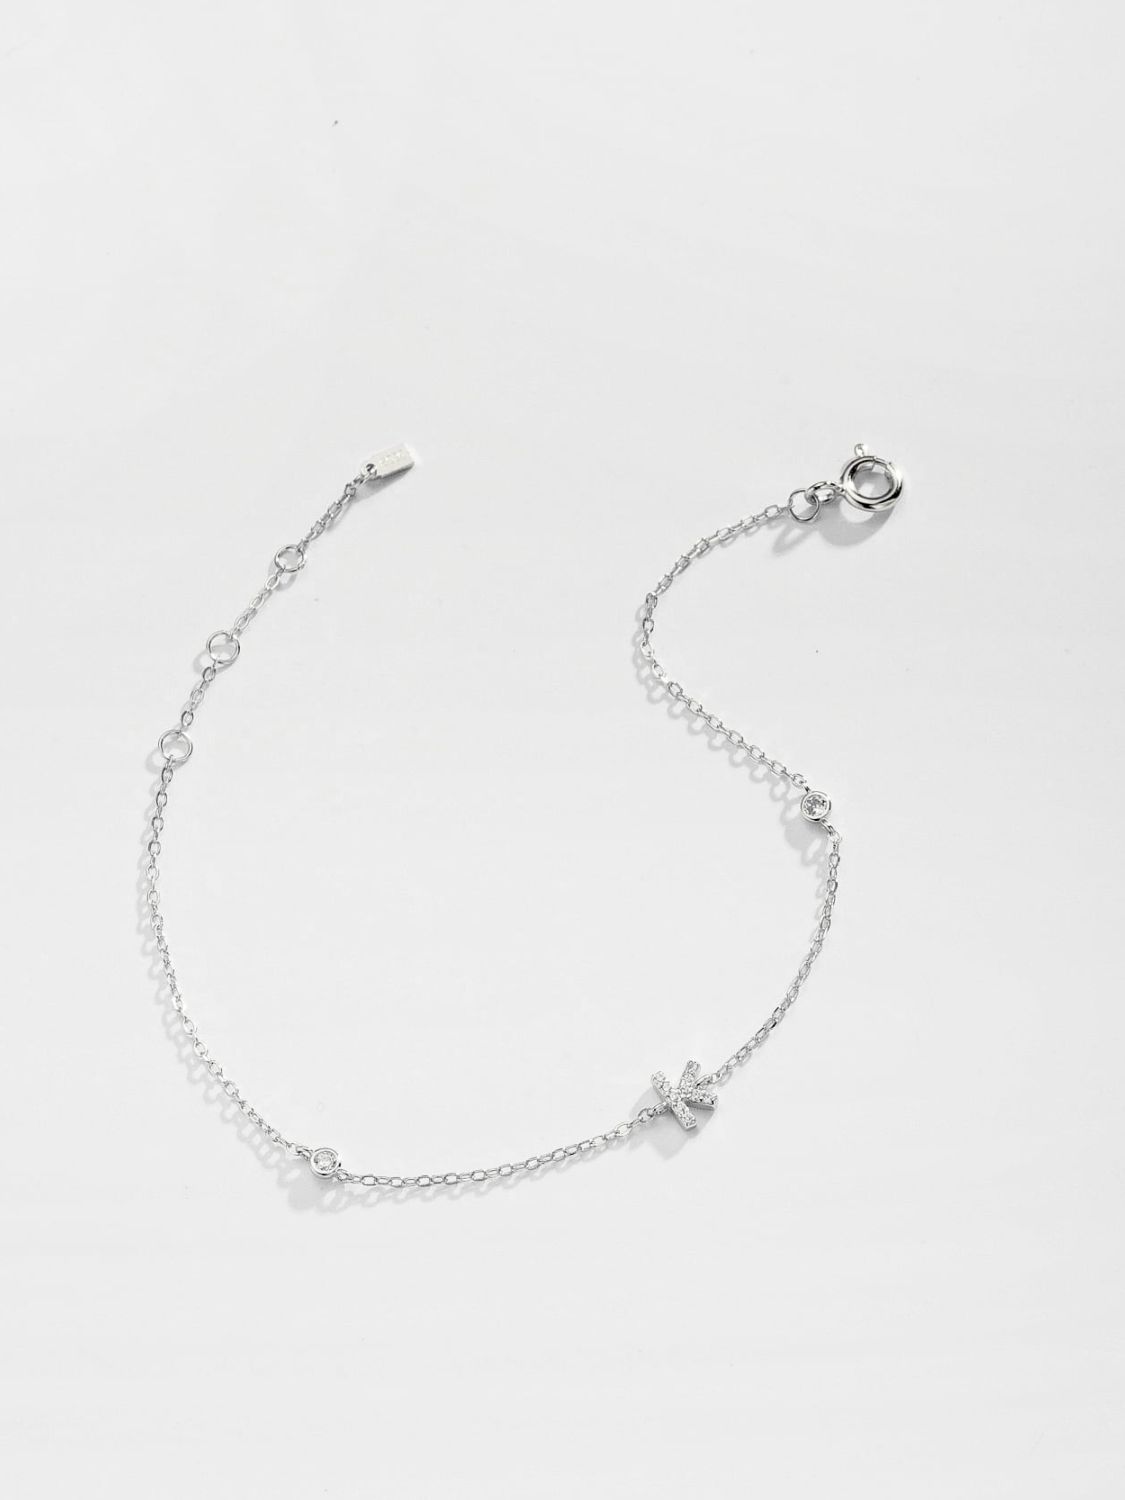 Uylees Boutique G To K Zircon 925 Sterling Silver Bracelet